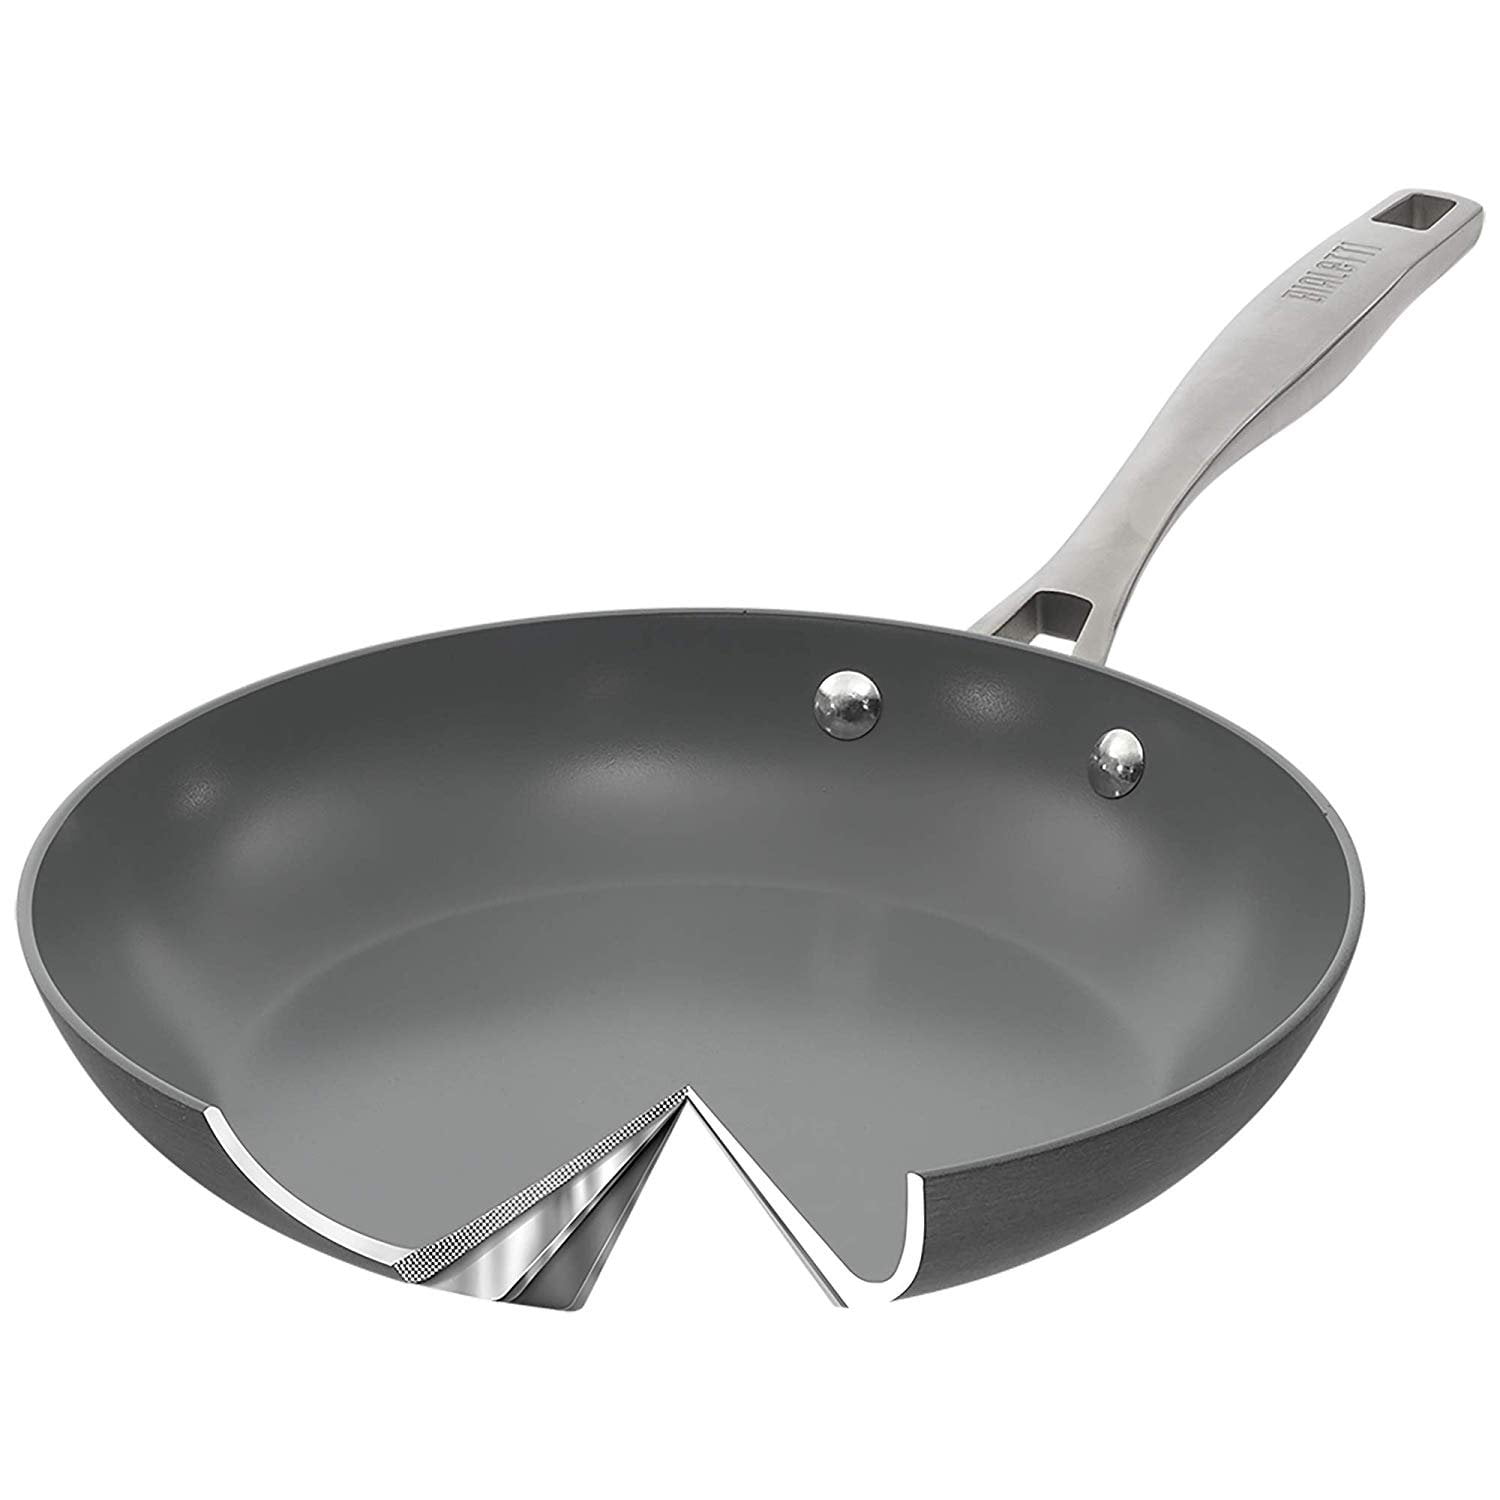  Bialetti 11.75 Ceramic Pro Non-Stick Hard Anodized Aluminum  Frying Pan, Gray: Home & Kitchen